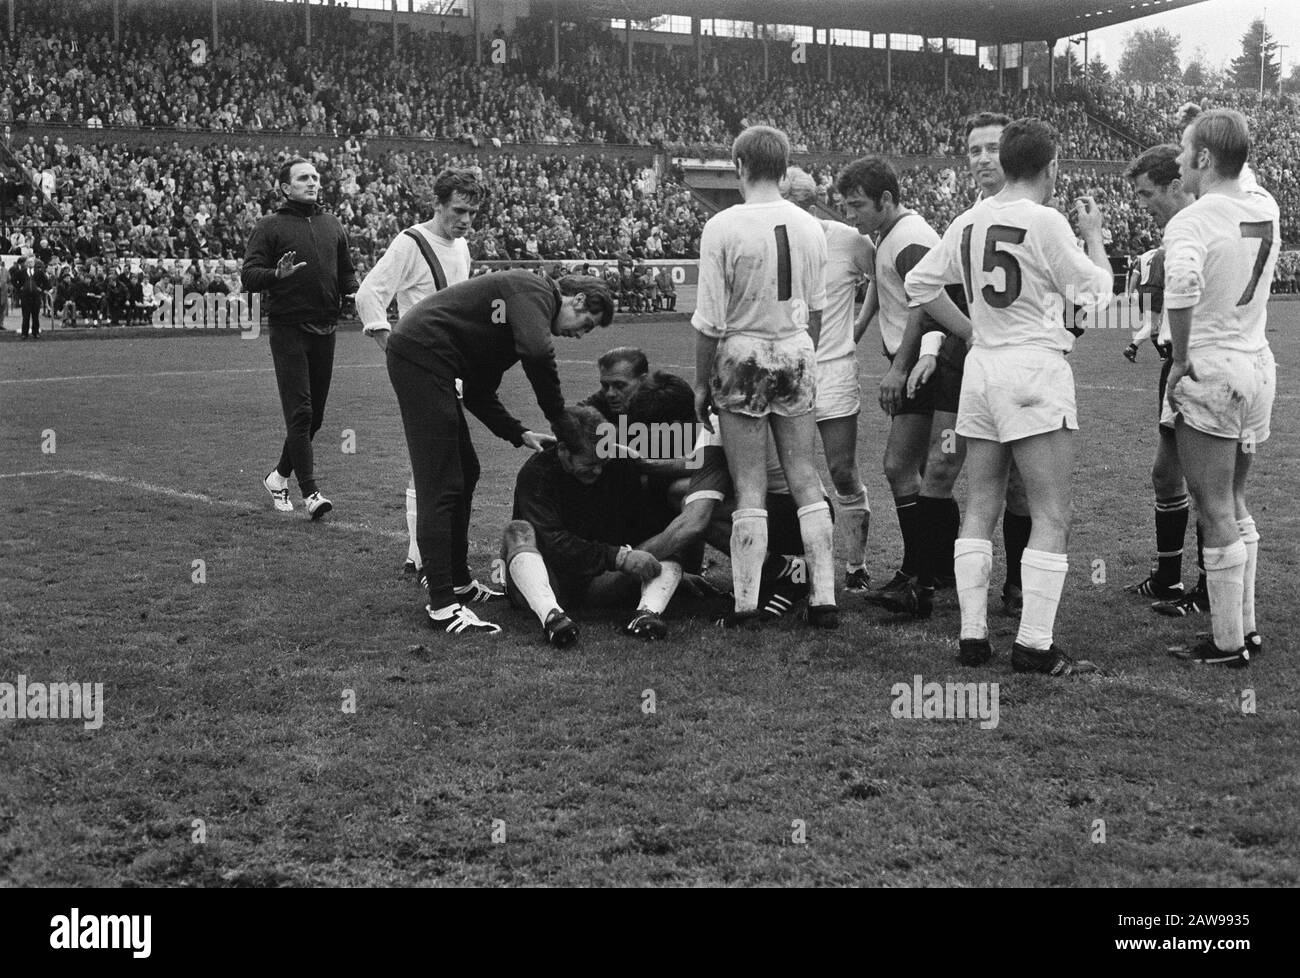 NEC v Feyenoord 0-2. AC Milan assistant coach Maldini on stand Date: October 26, 1969 Keywords: sport, football Institution Name: Feyenoord Stock Photo